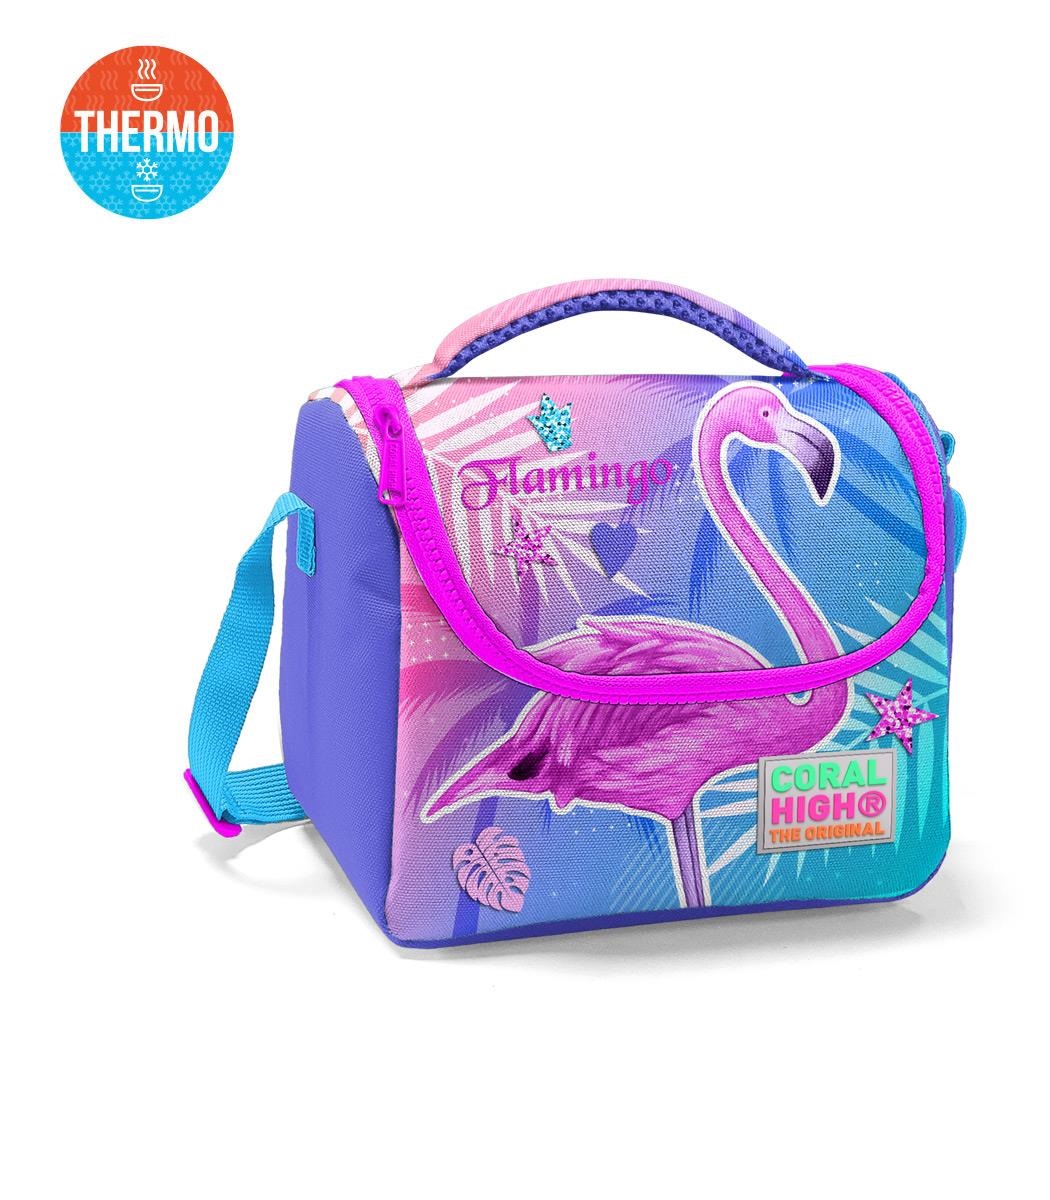 Coral High Kids Thermal Lunch Bag - Lavender Pink Flamingo Patterned